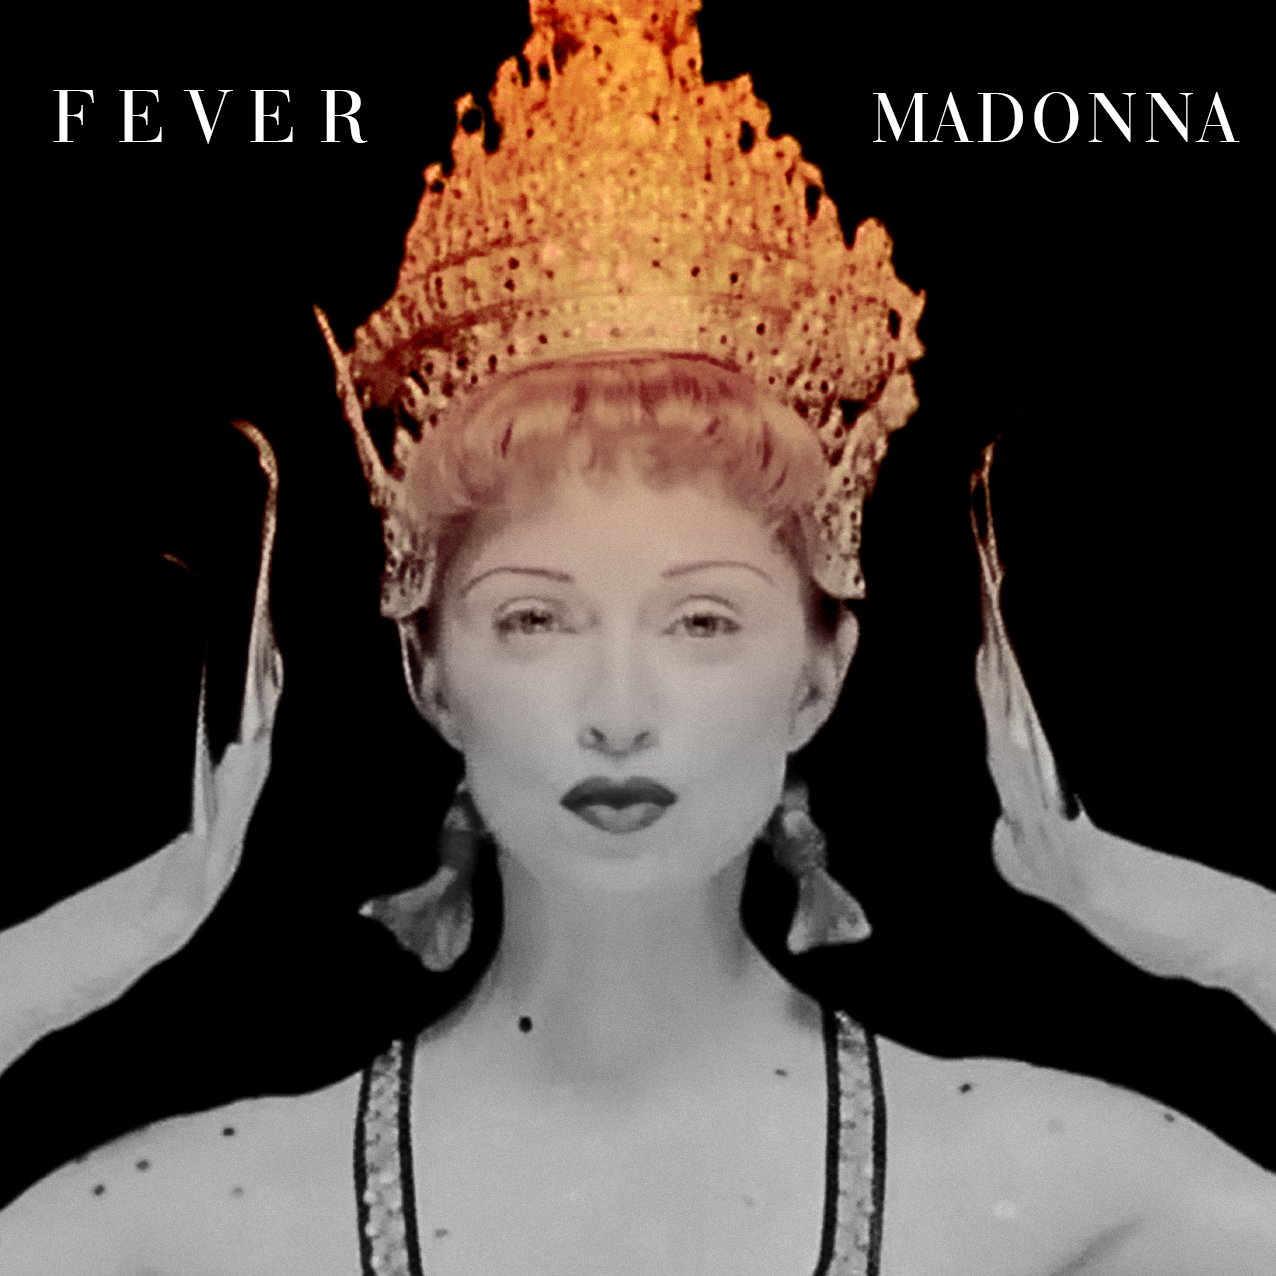 Fever+%287%29+by+Oscar+Marquez.jpg